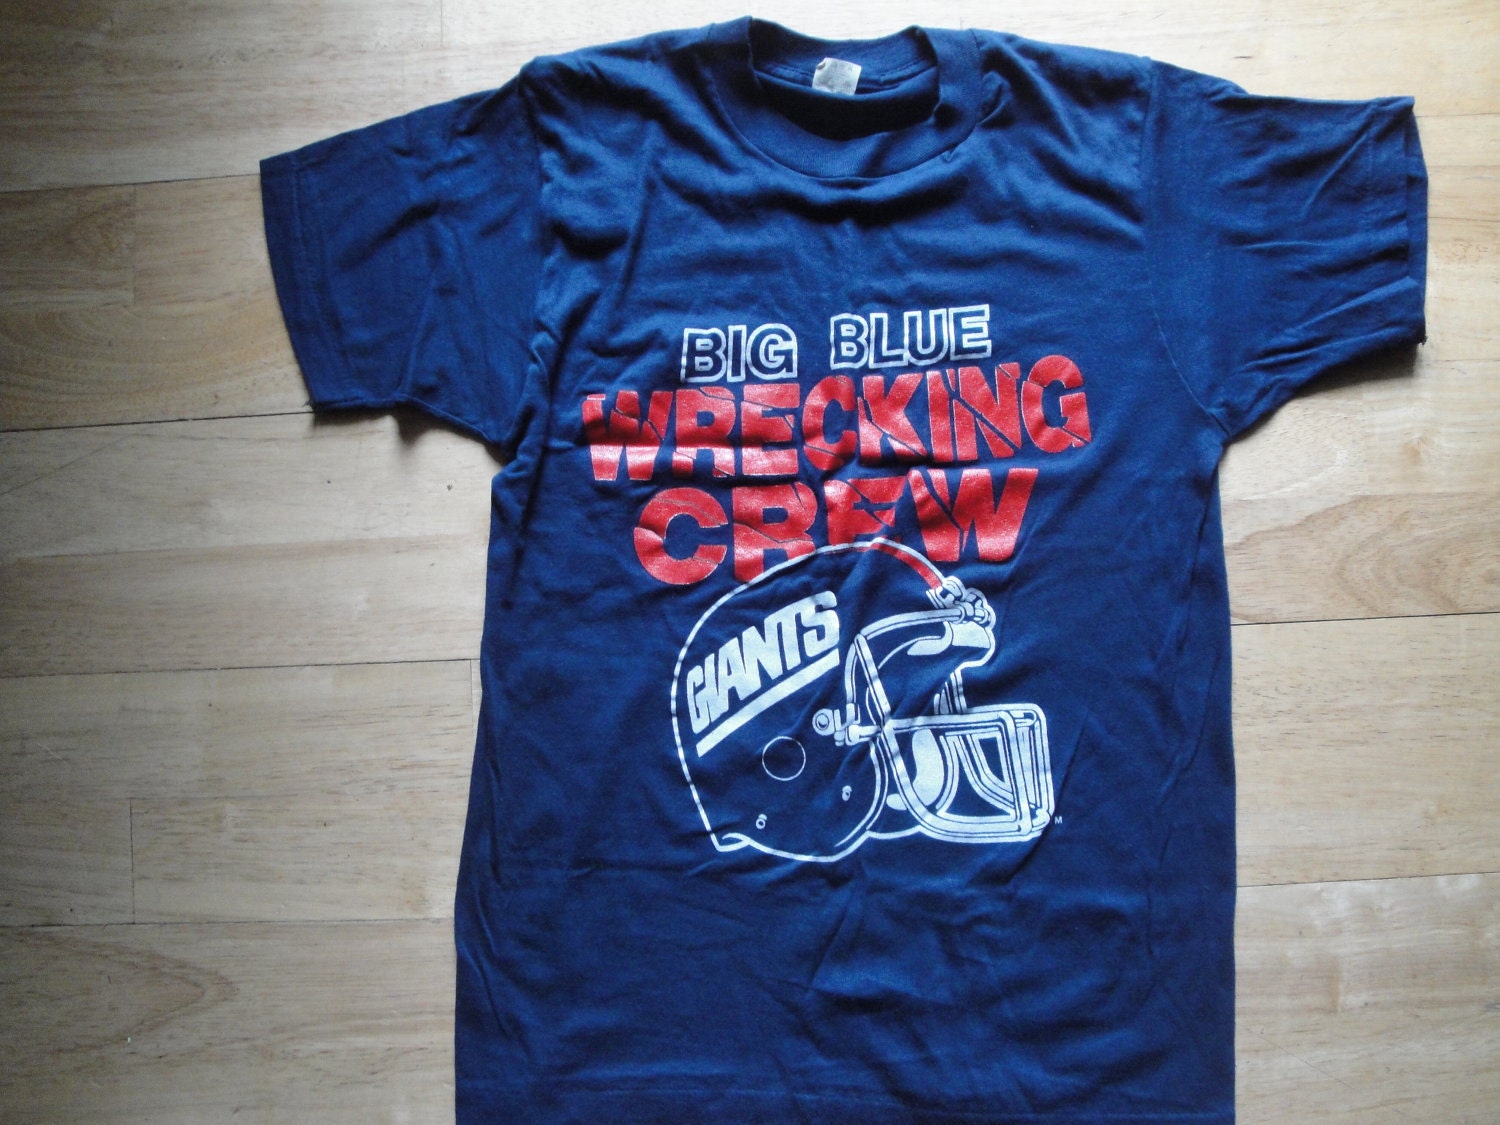 Vintage NY Giants Big Blue Wrecking Crew Tshirt